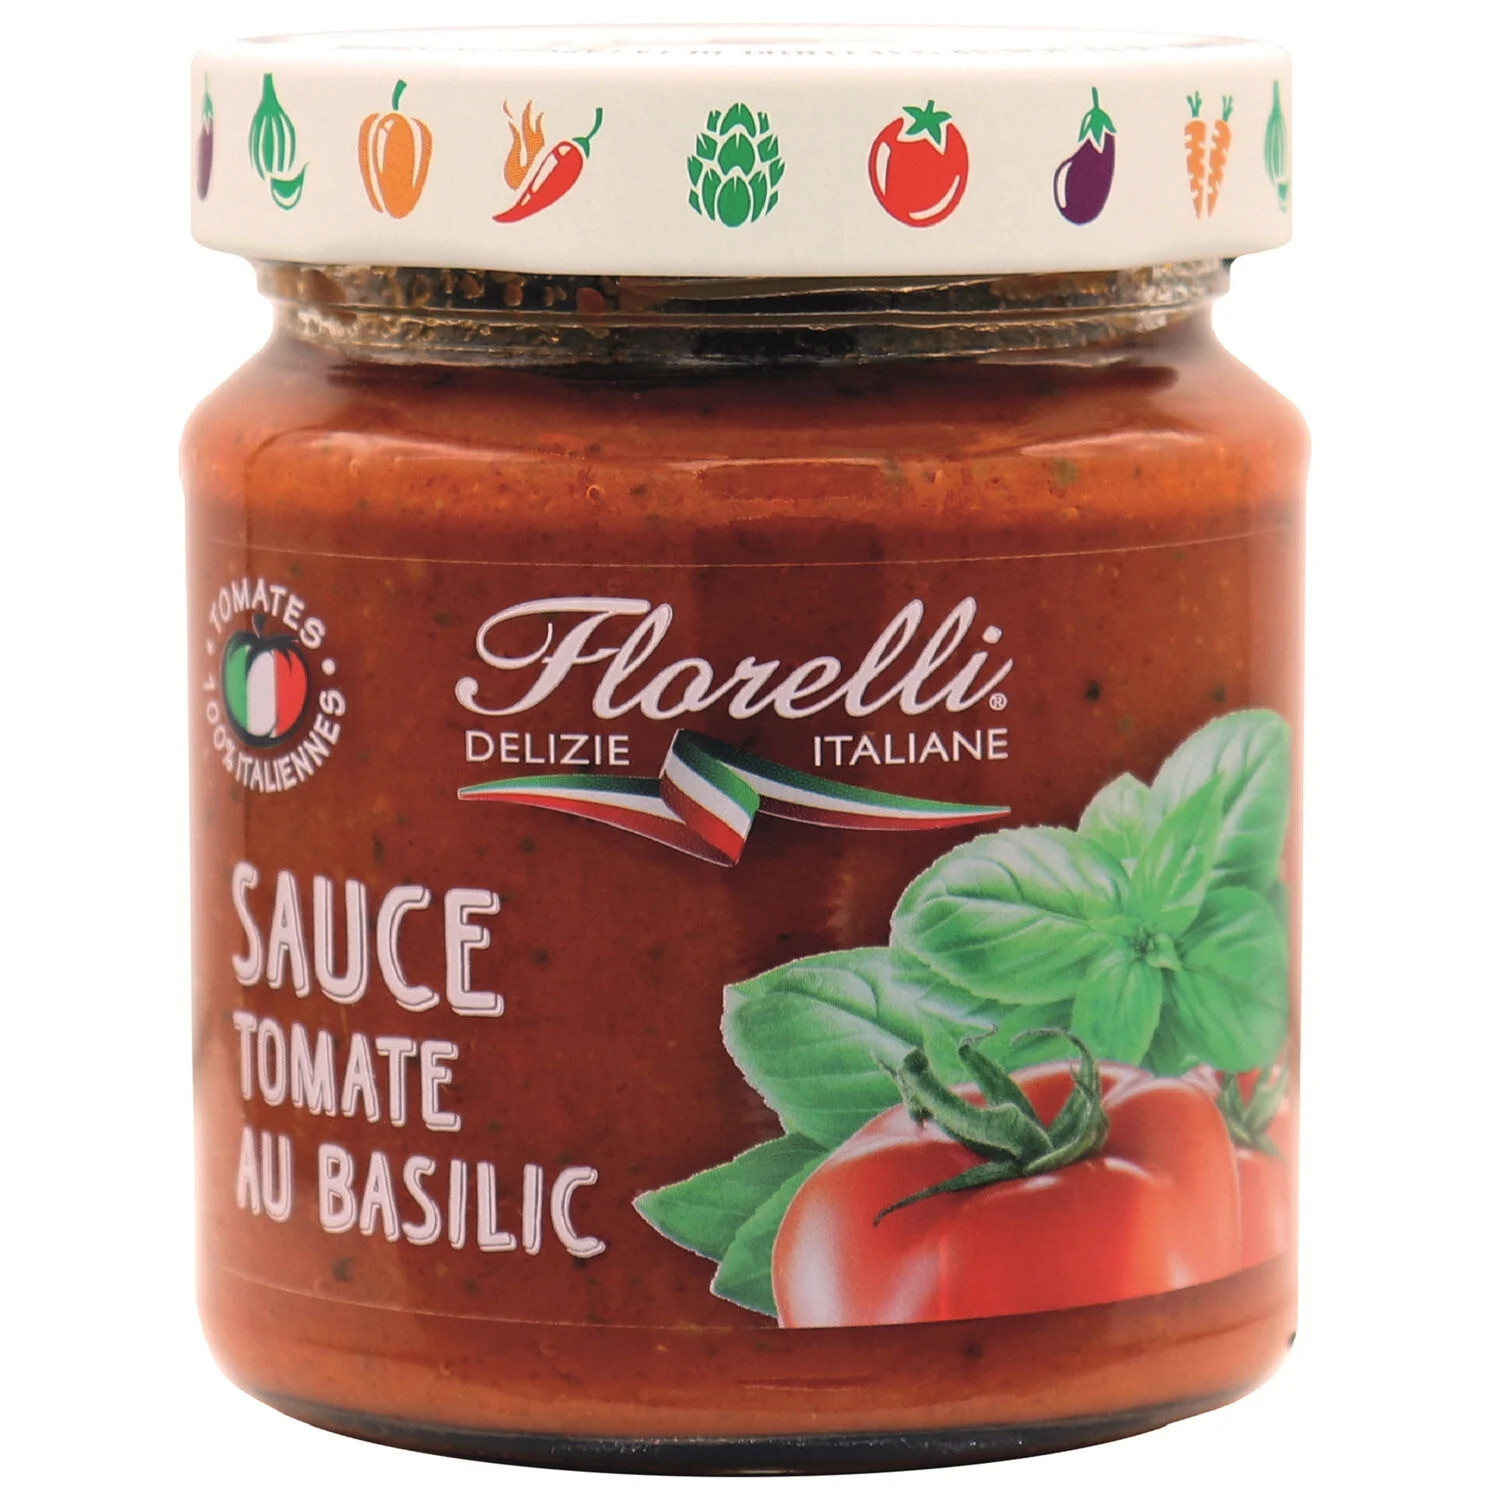 250g Florelli Sce Tomate Basil